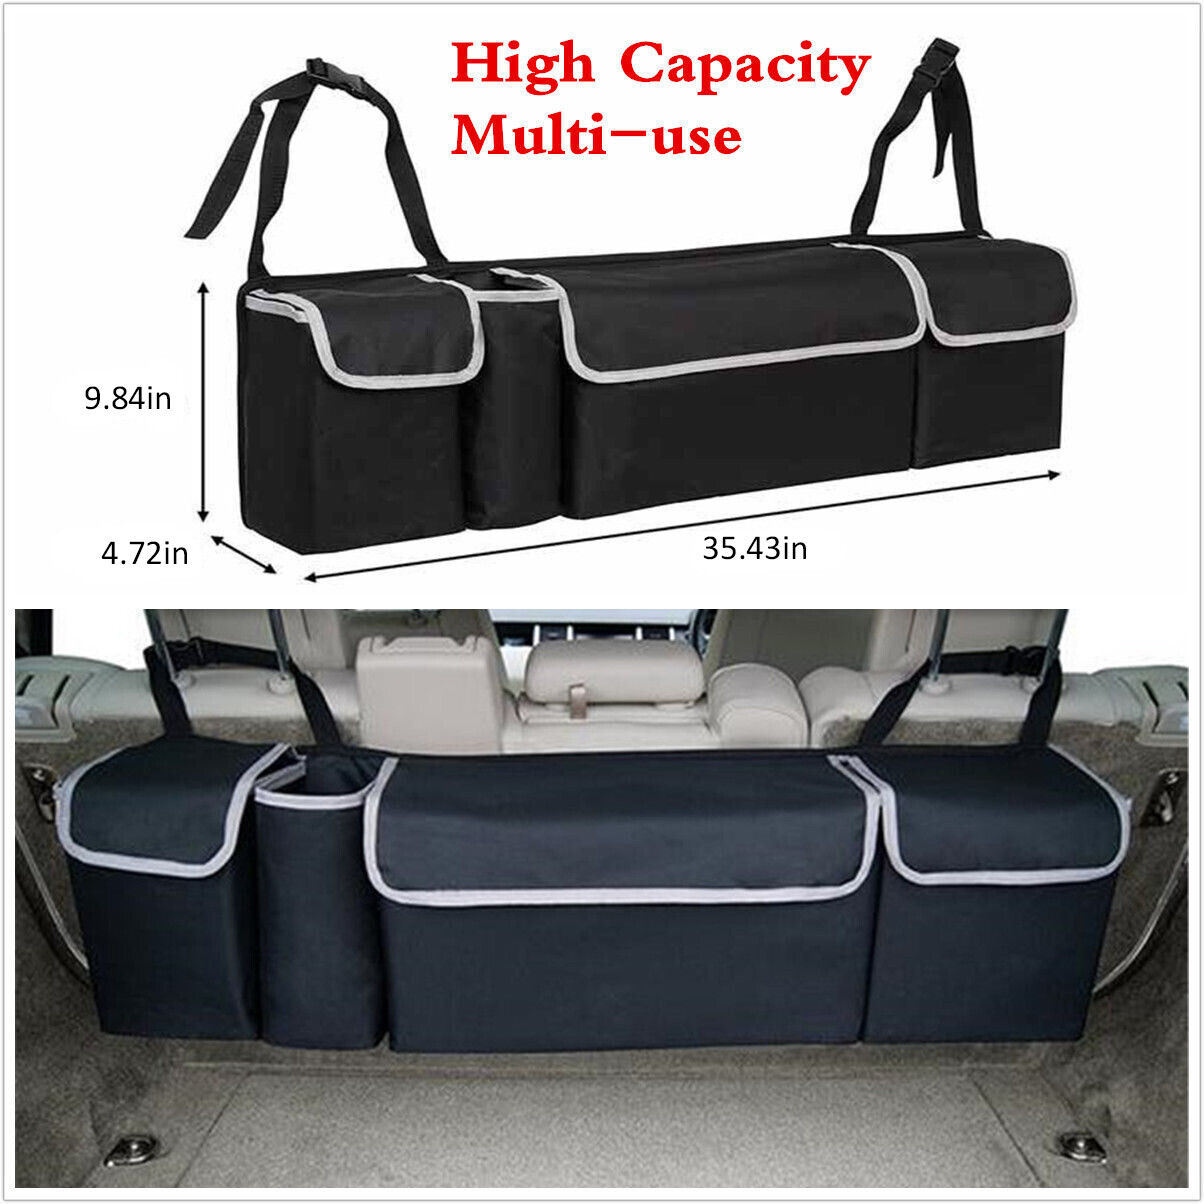 High Capacity Multi-use Car Seat Back Organizers Bag Interior Accessories Black